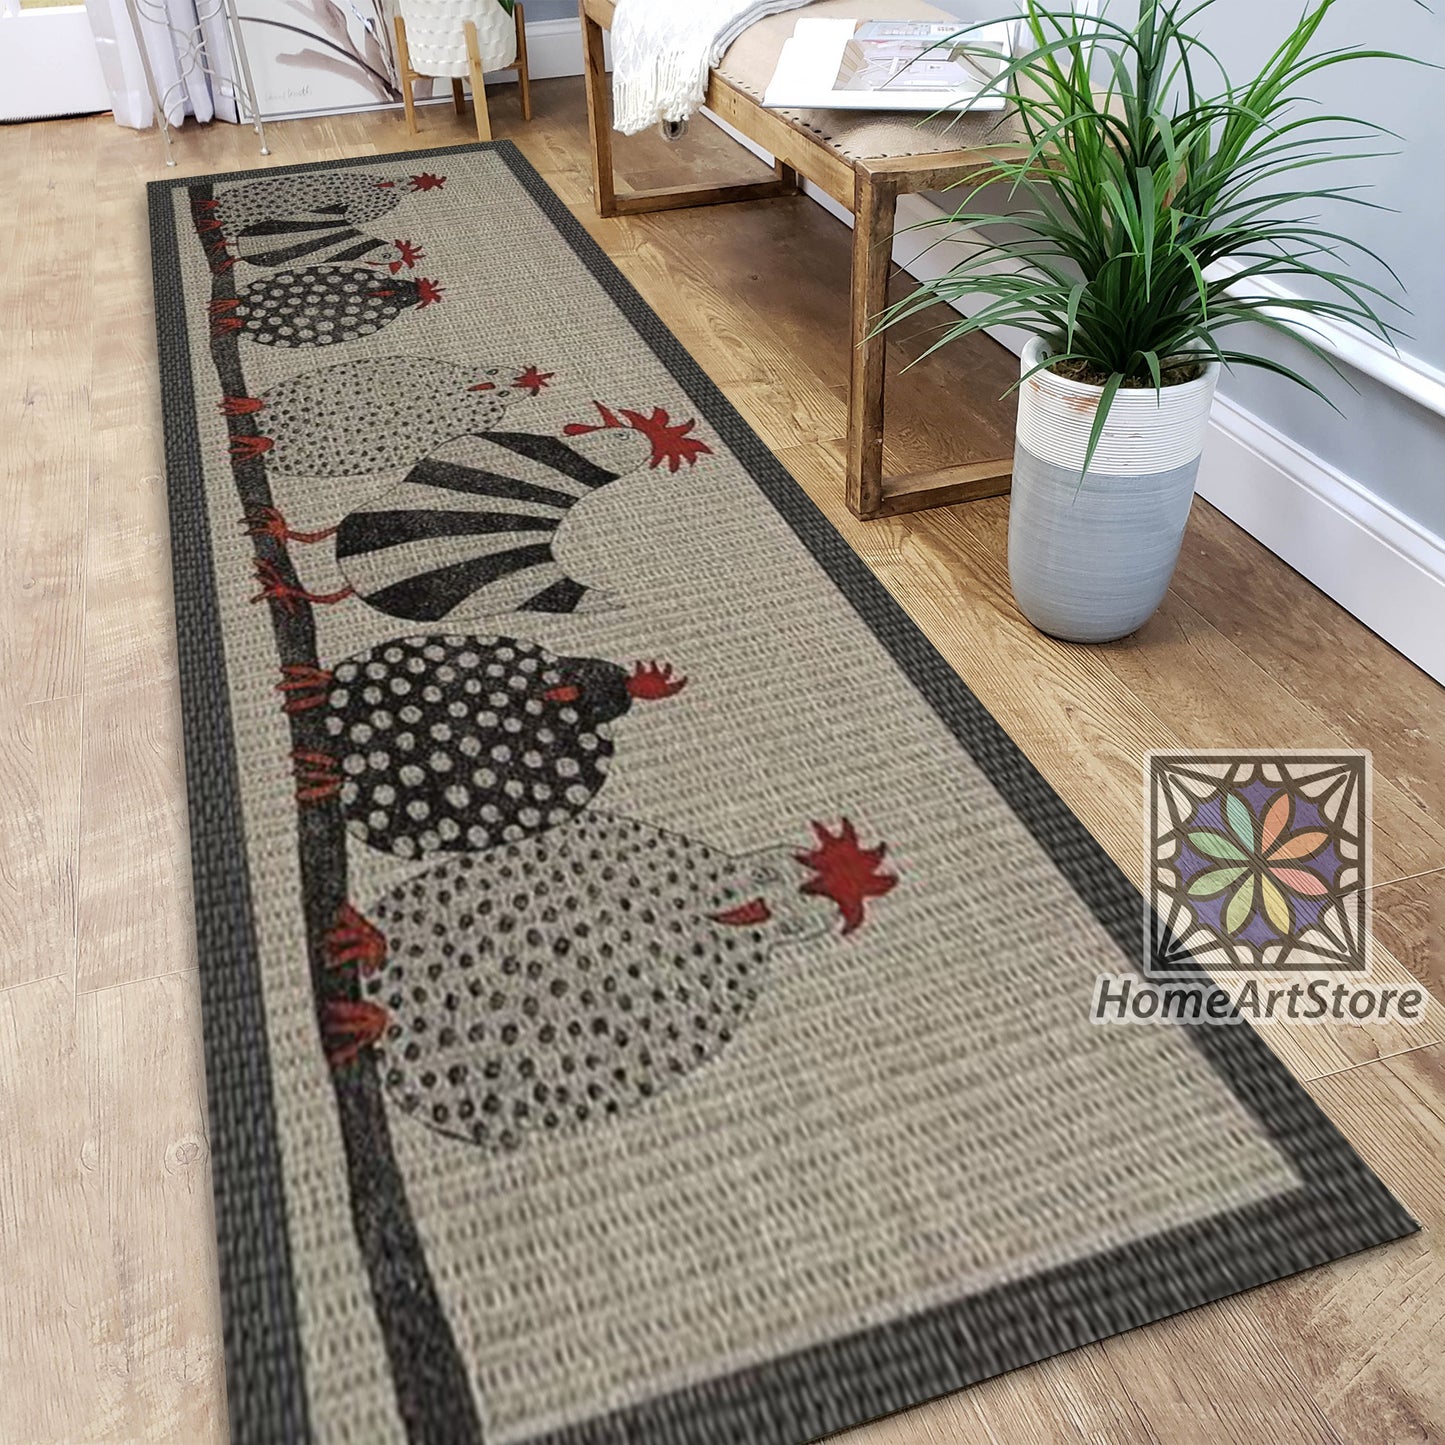 Chicken Themed Rug, Animal Carpet, Kitchen Runner Mat, Dining Room Decor